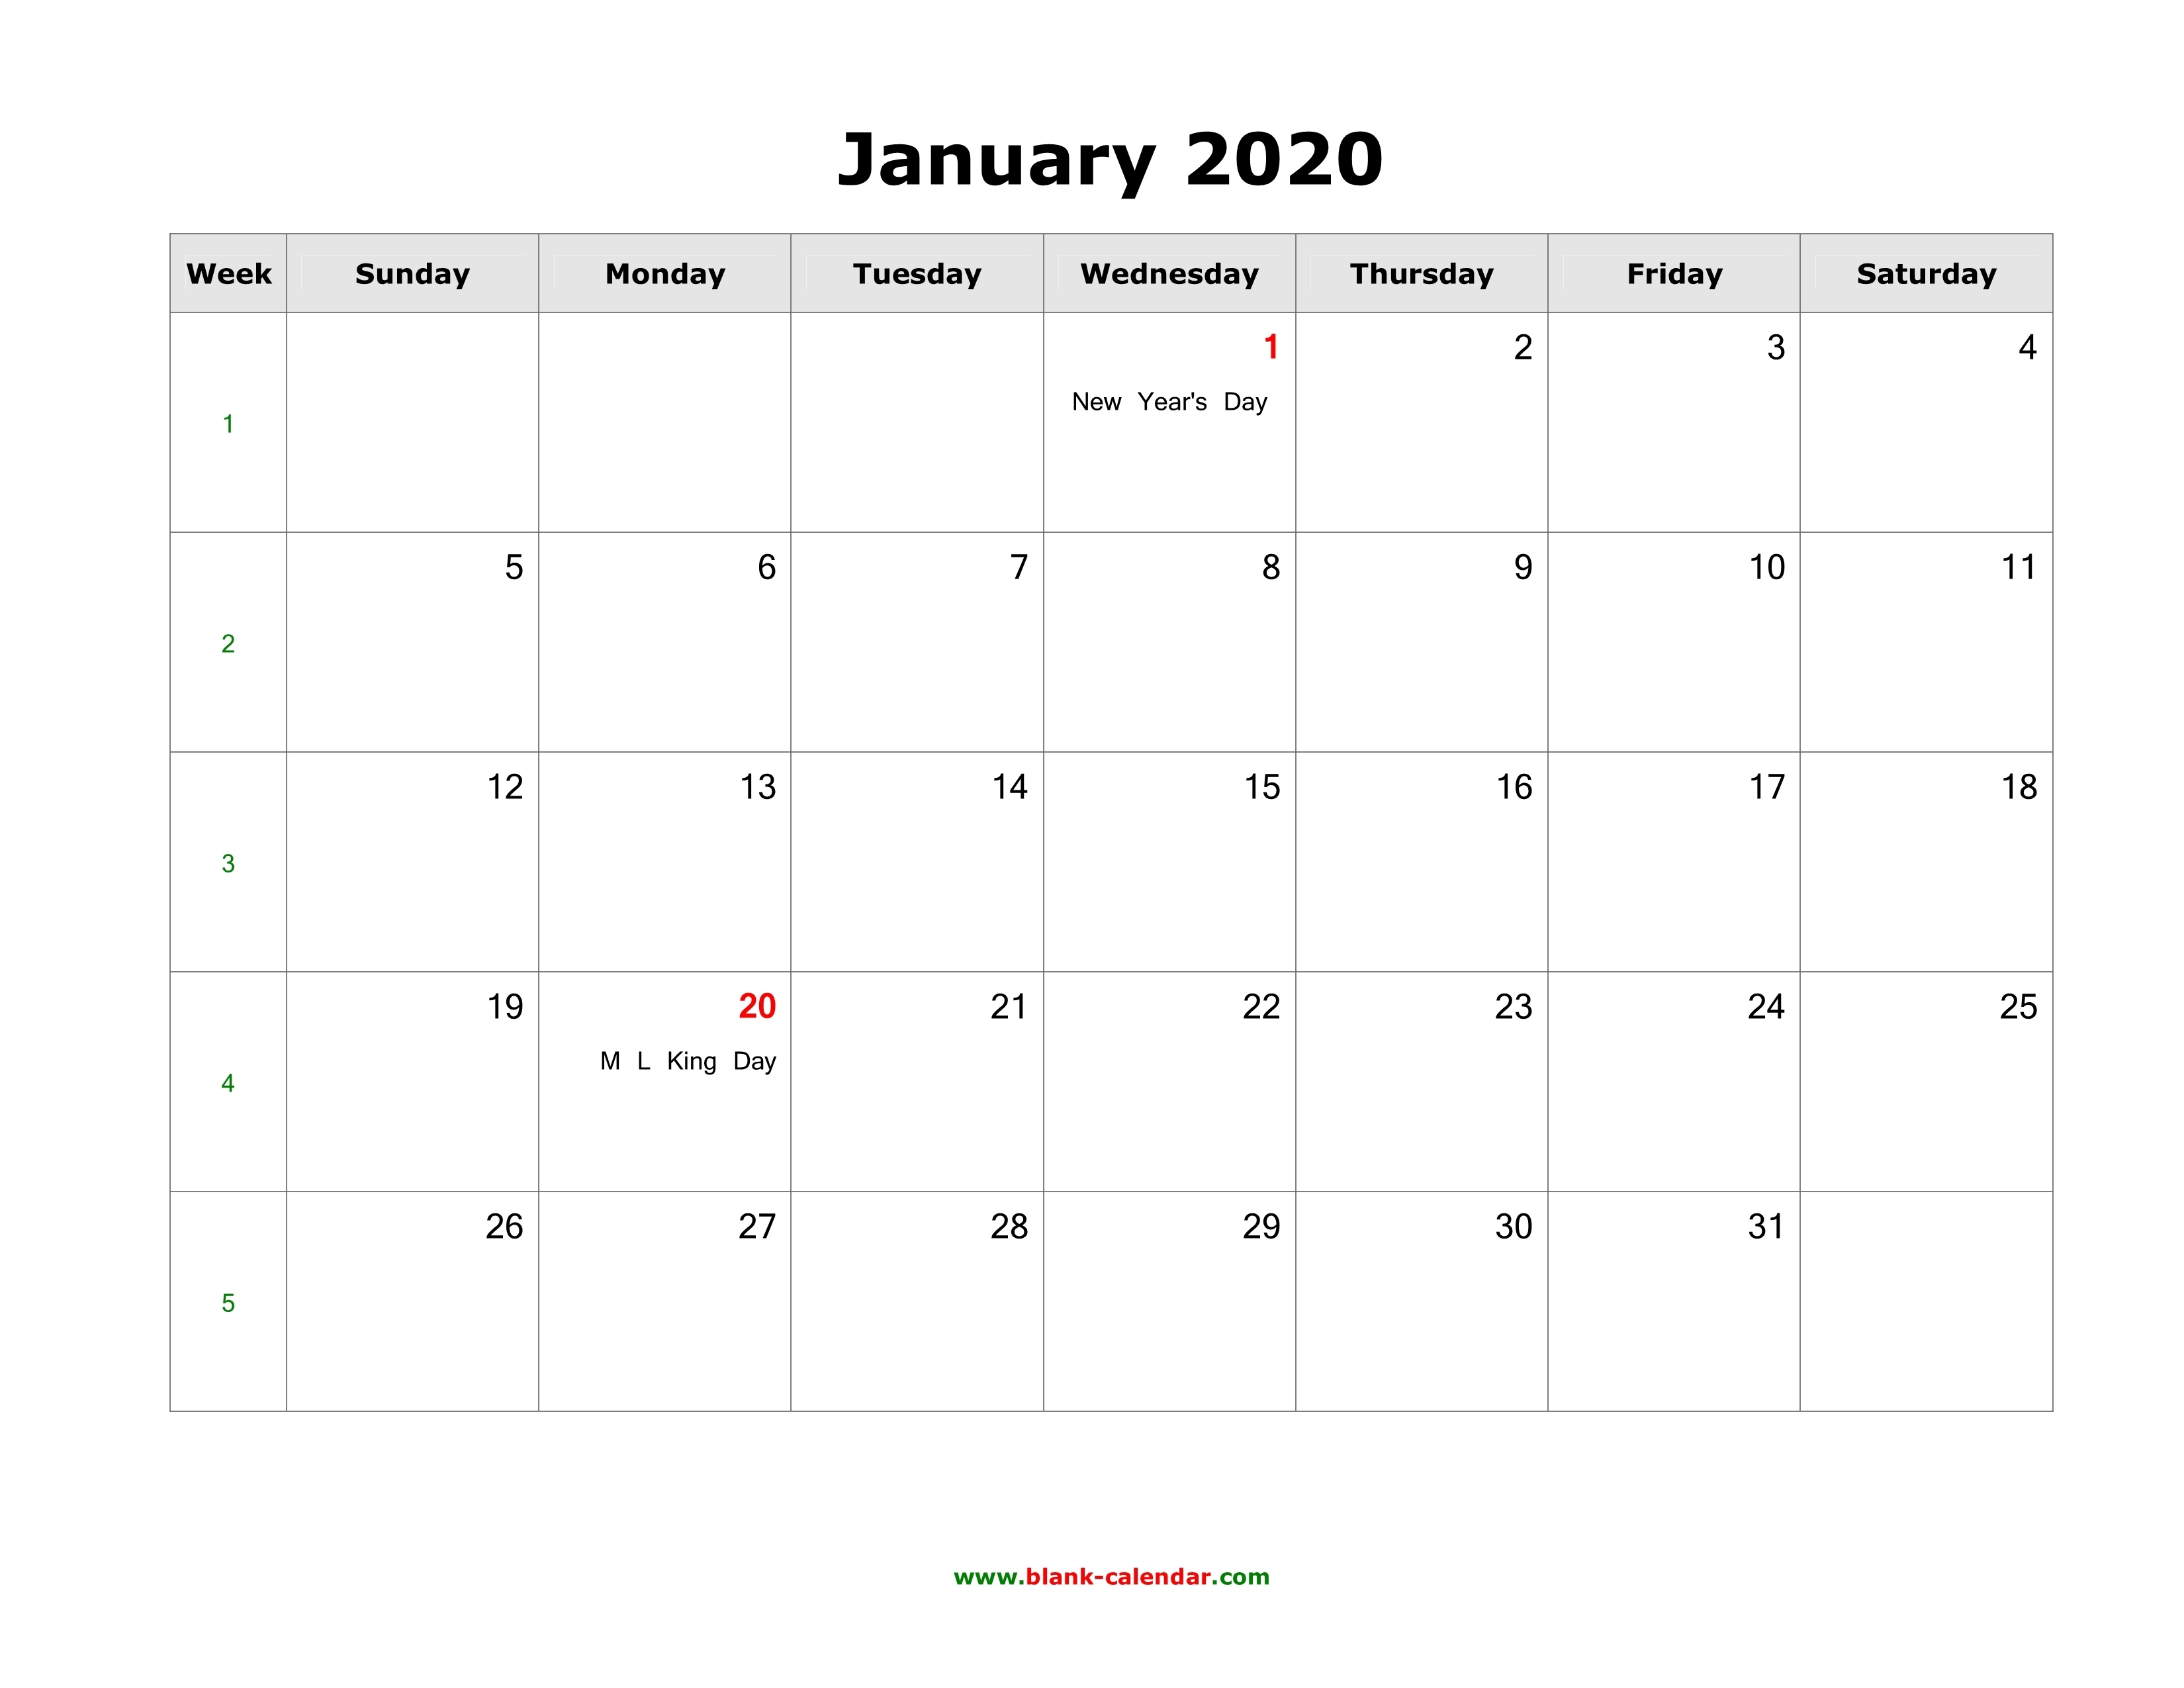 January 2020 Blank Calendar | Free Download Calendar Templates Calendar Template In Word